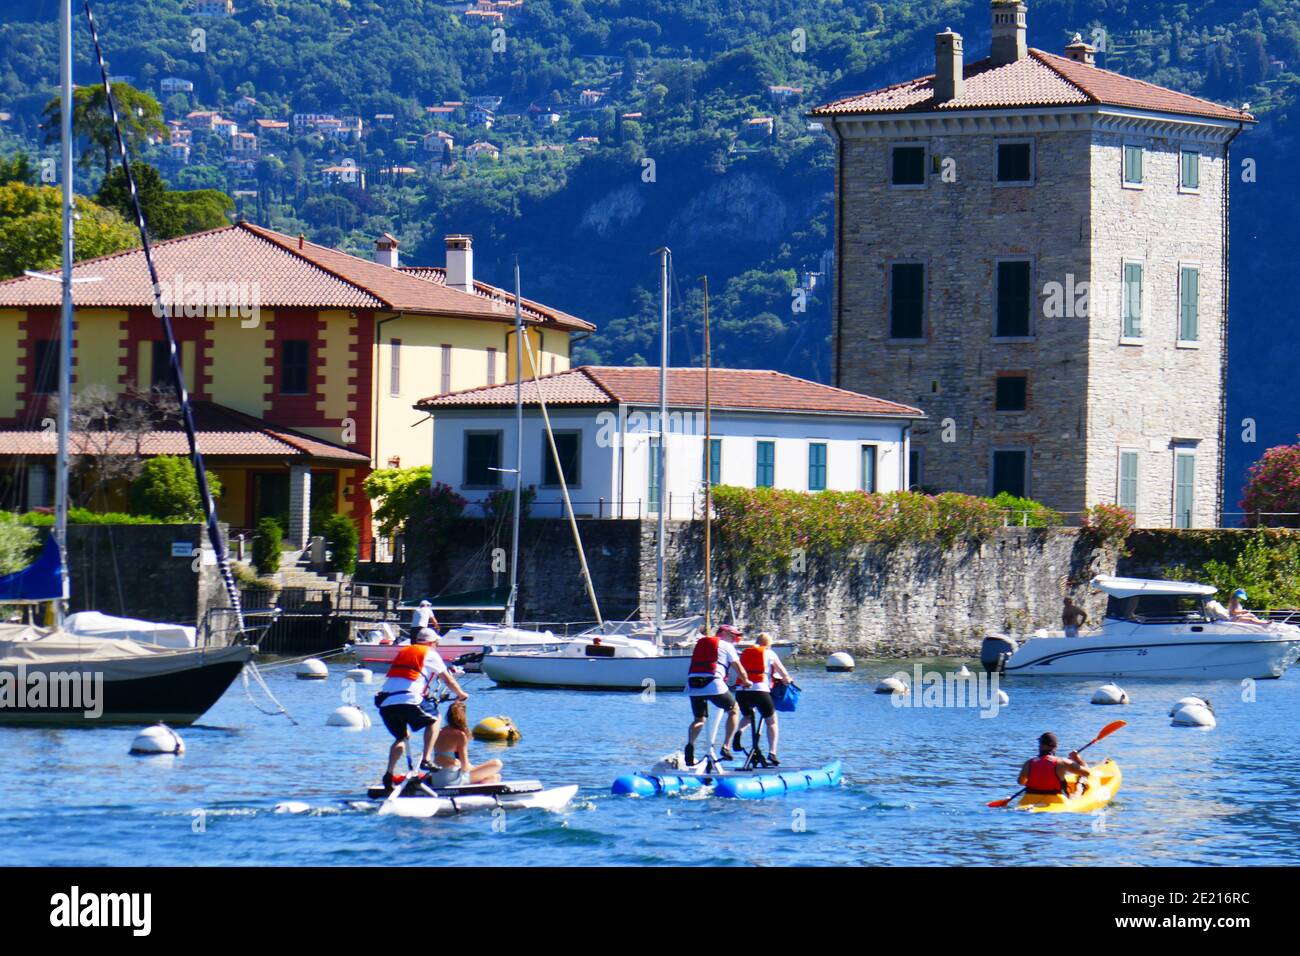 Italy, Lombardy, Como Lake, Lario, Bellagio, Pescallos, Boat, People bike, Hoses, Architecture, Stock Photo